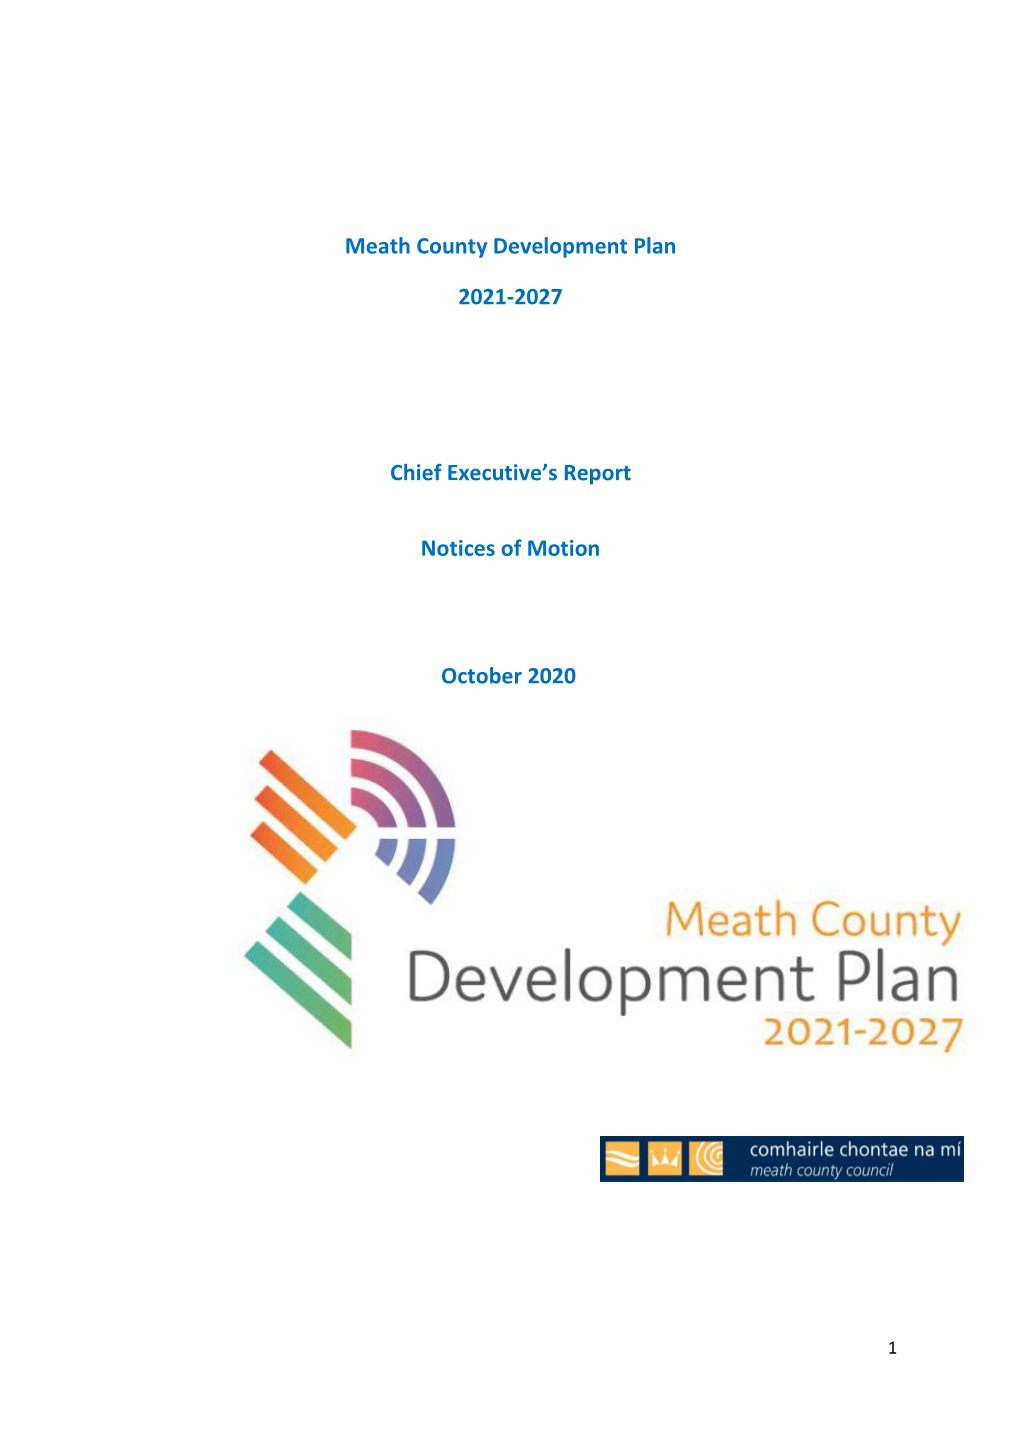 Meath County Development Plan 2021-2027 Chief Executive's